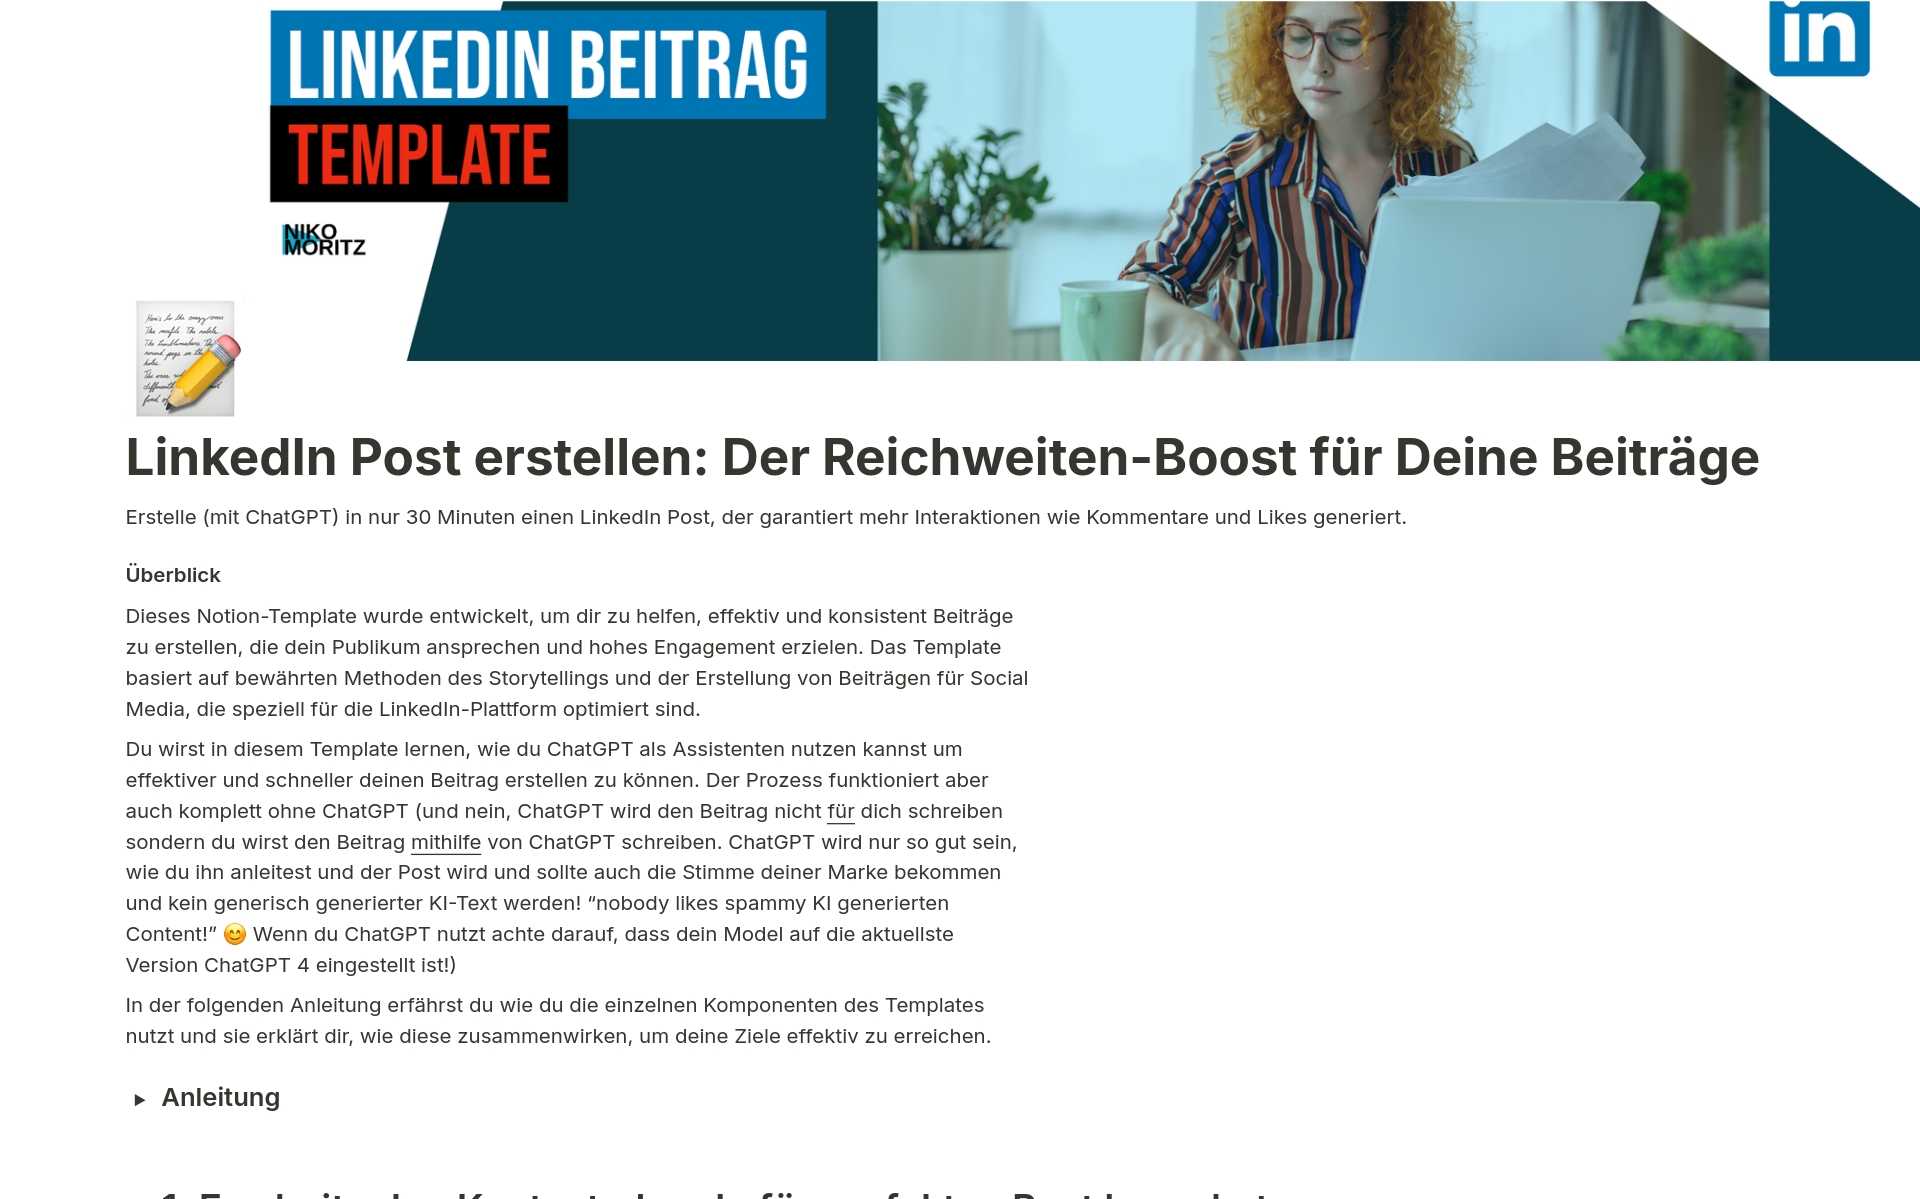 Vista previa de plantilla para LinkedIn Post Reichweiten Boost